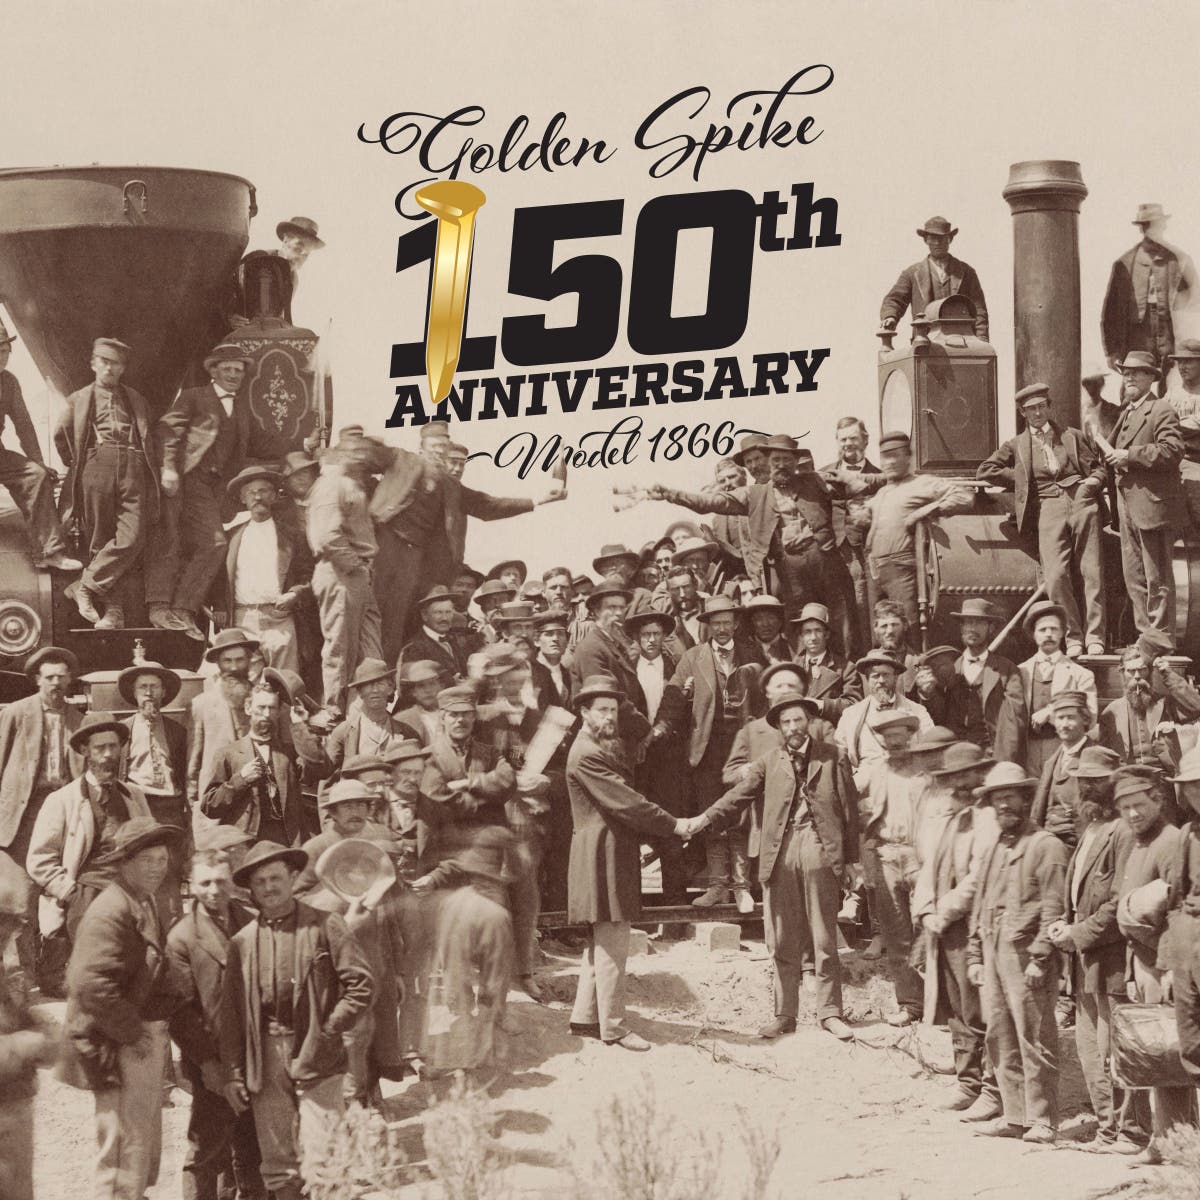 Golden Spike 150th Anniversary